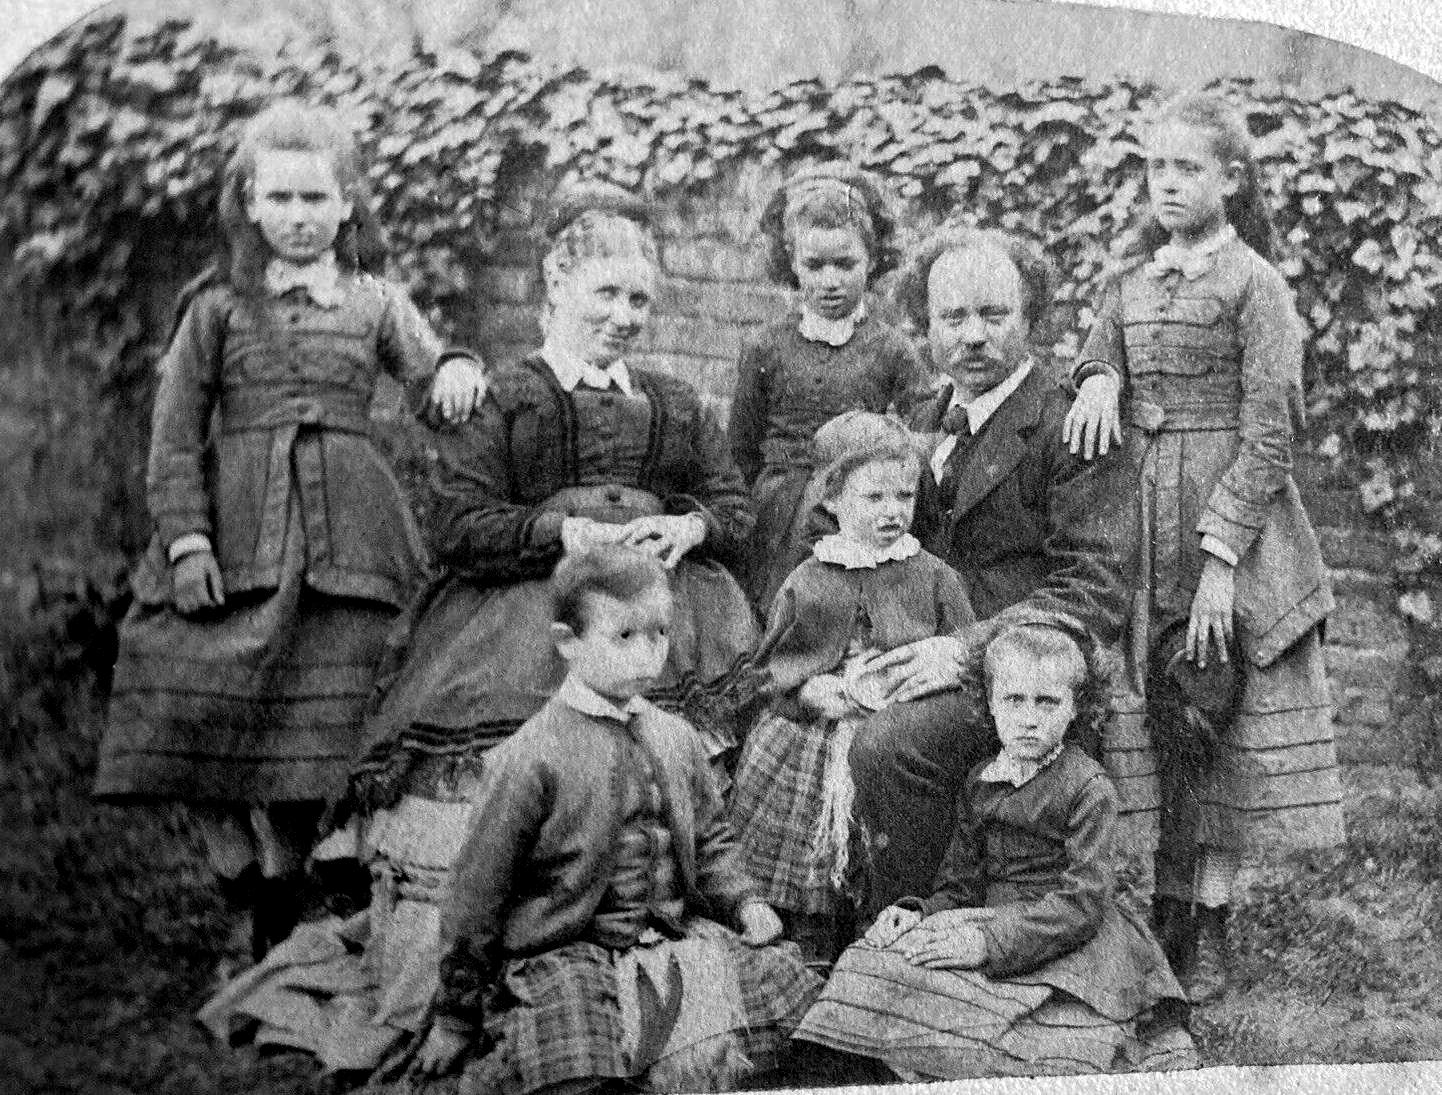 English 1860s families kilts